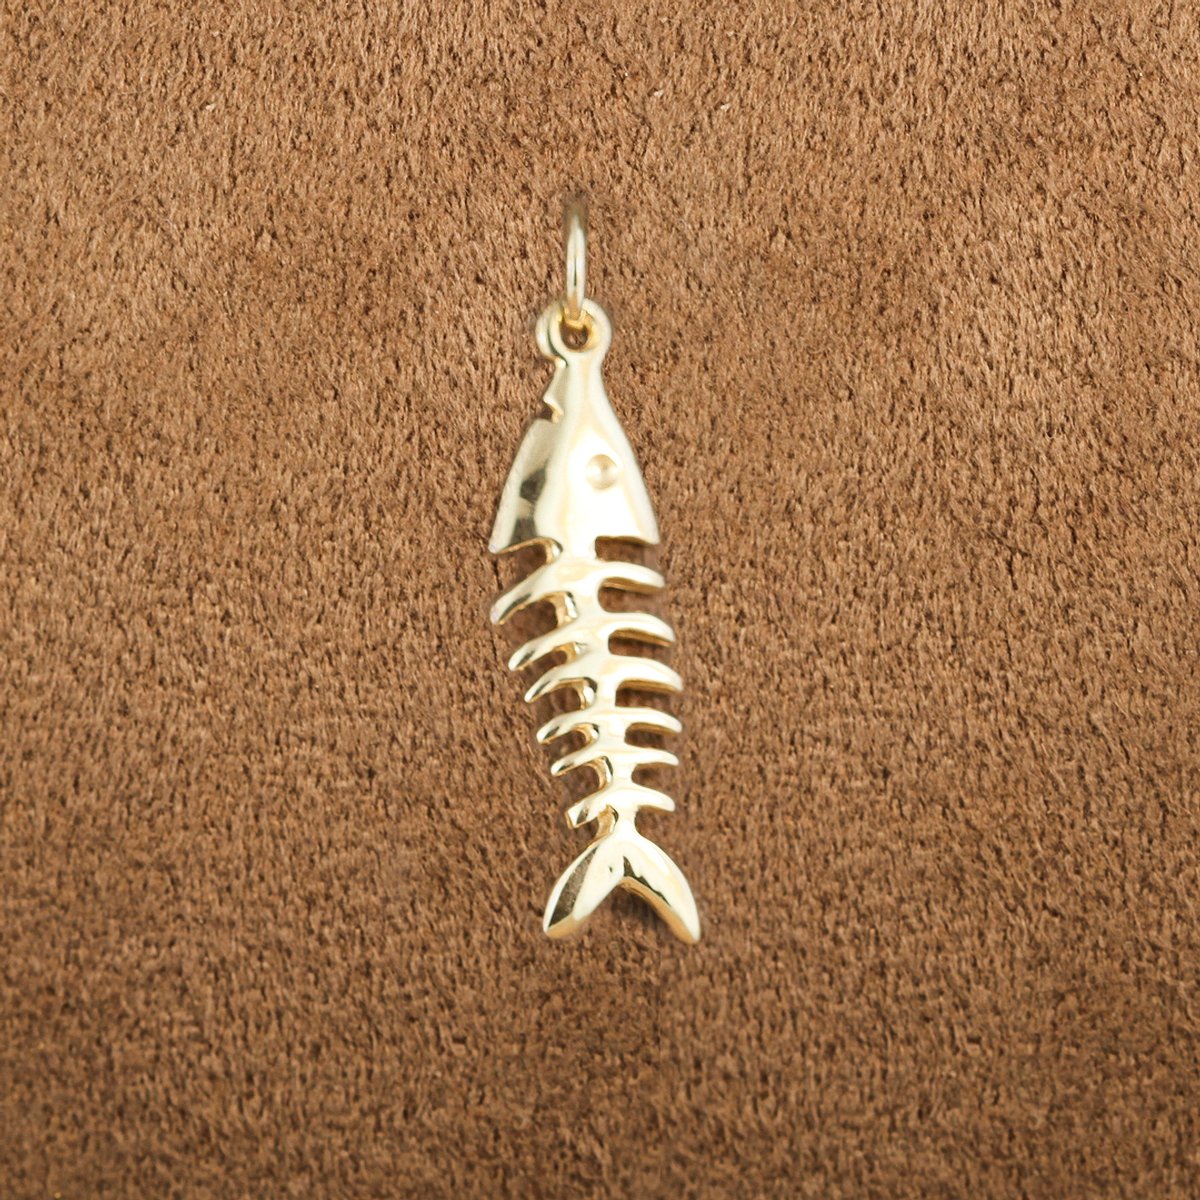 Fish skeleton charm